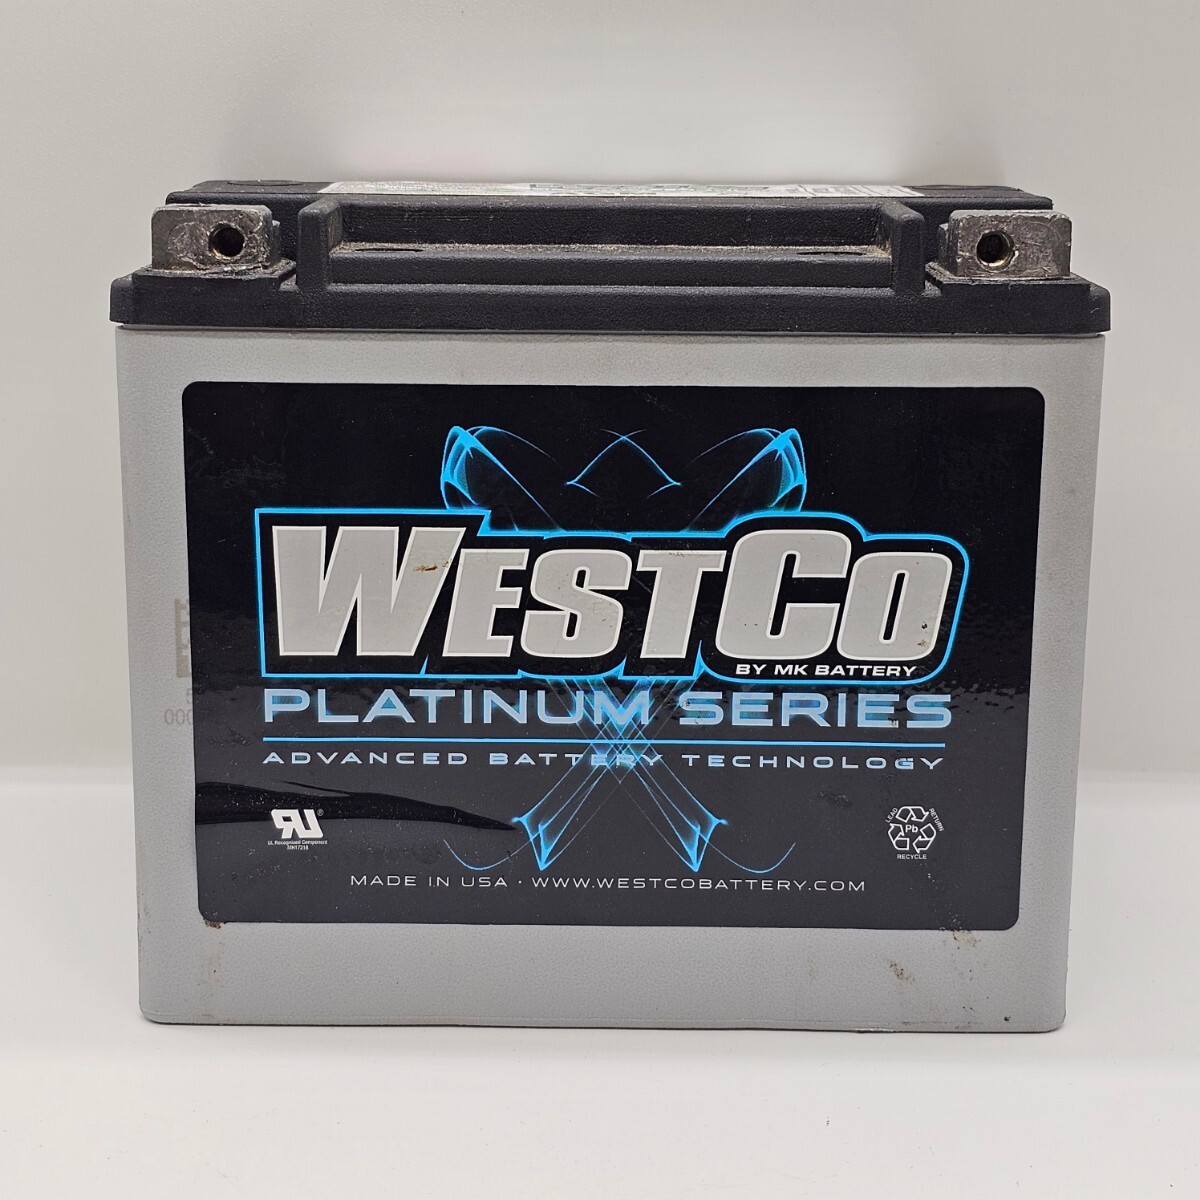 [4A38]1 jpy start WESTCO PLATINUM SERIES WCP20L 12V18Ah / CCA310 waist ko platinum series car battery 